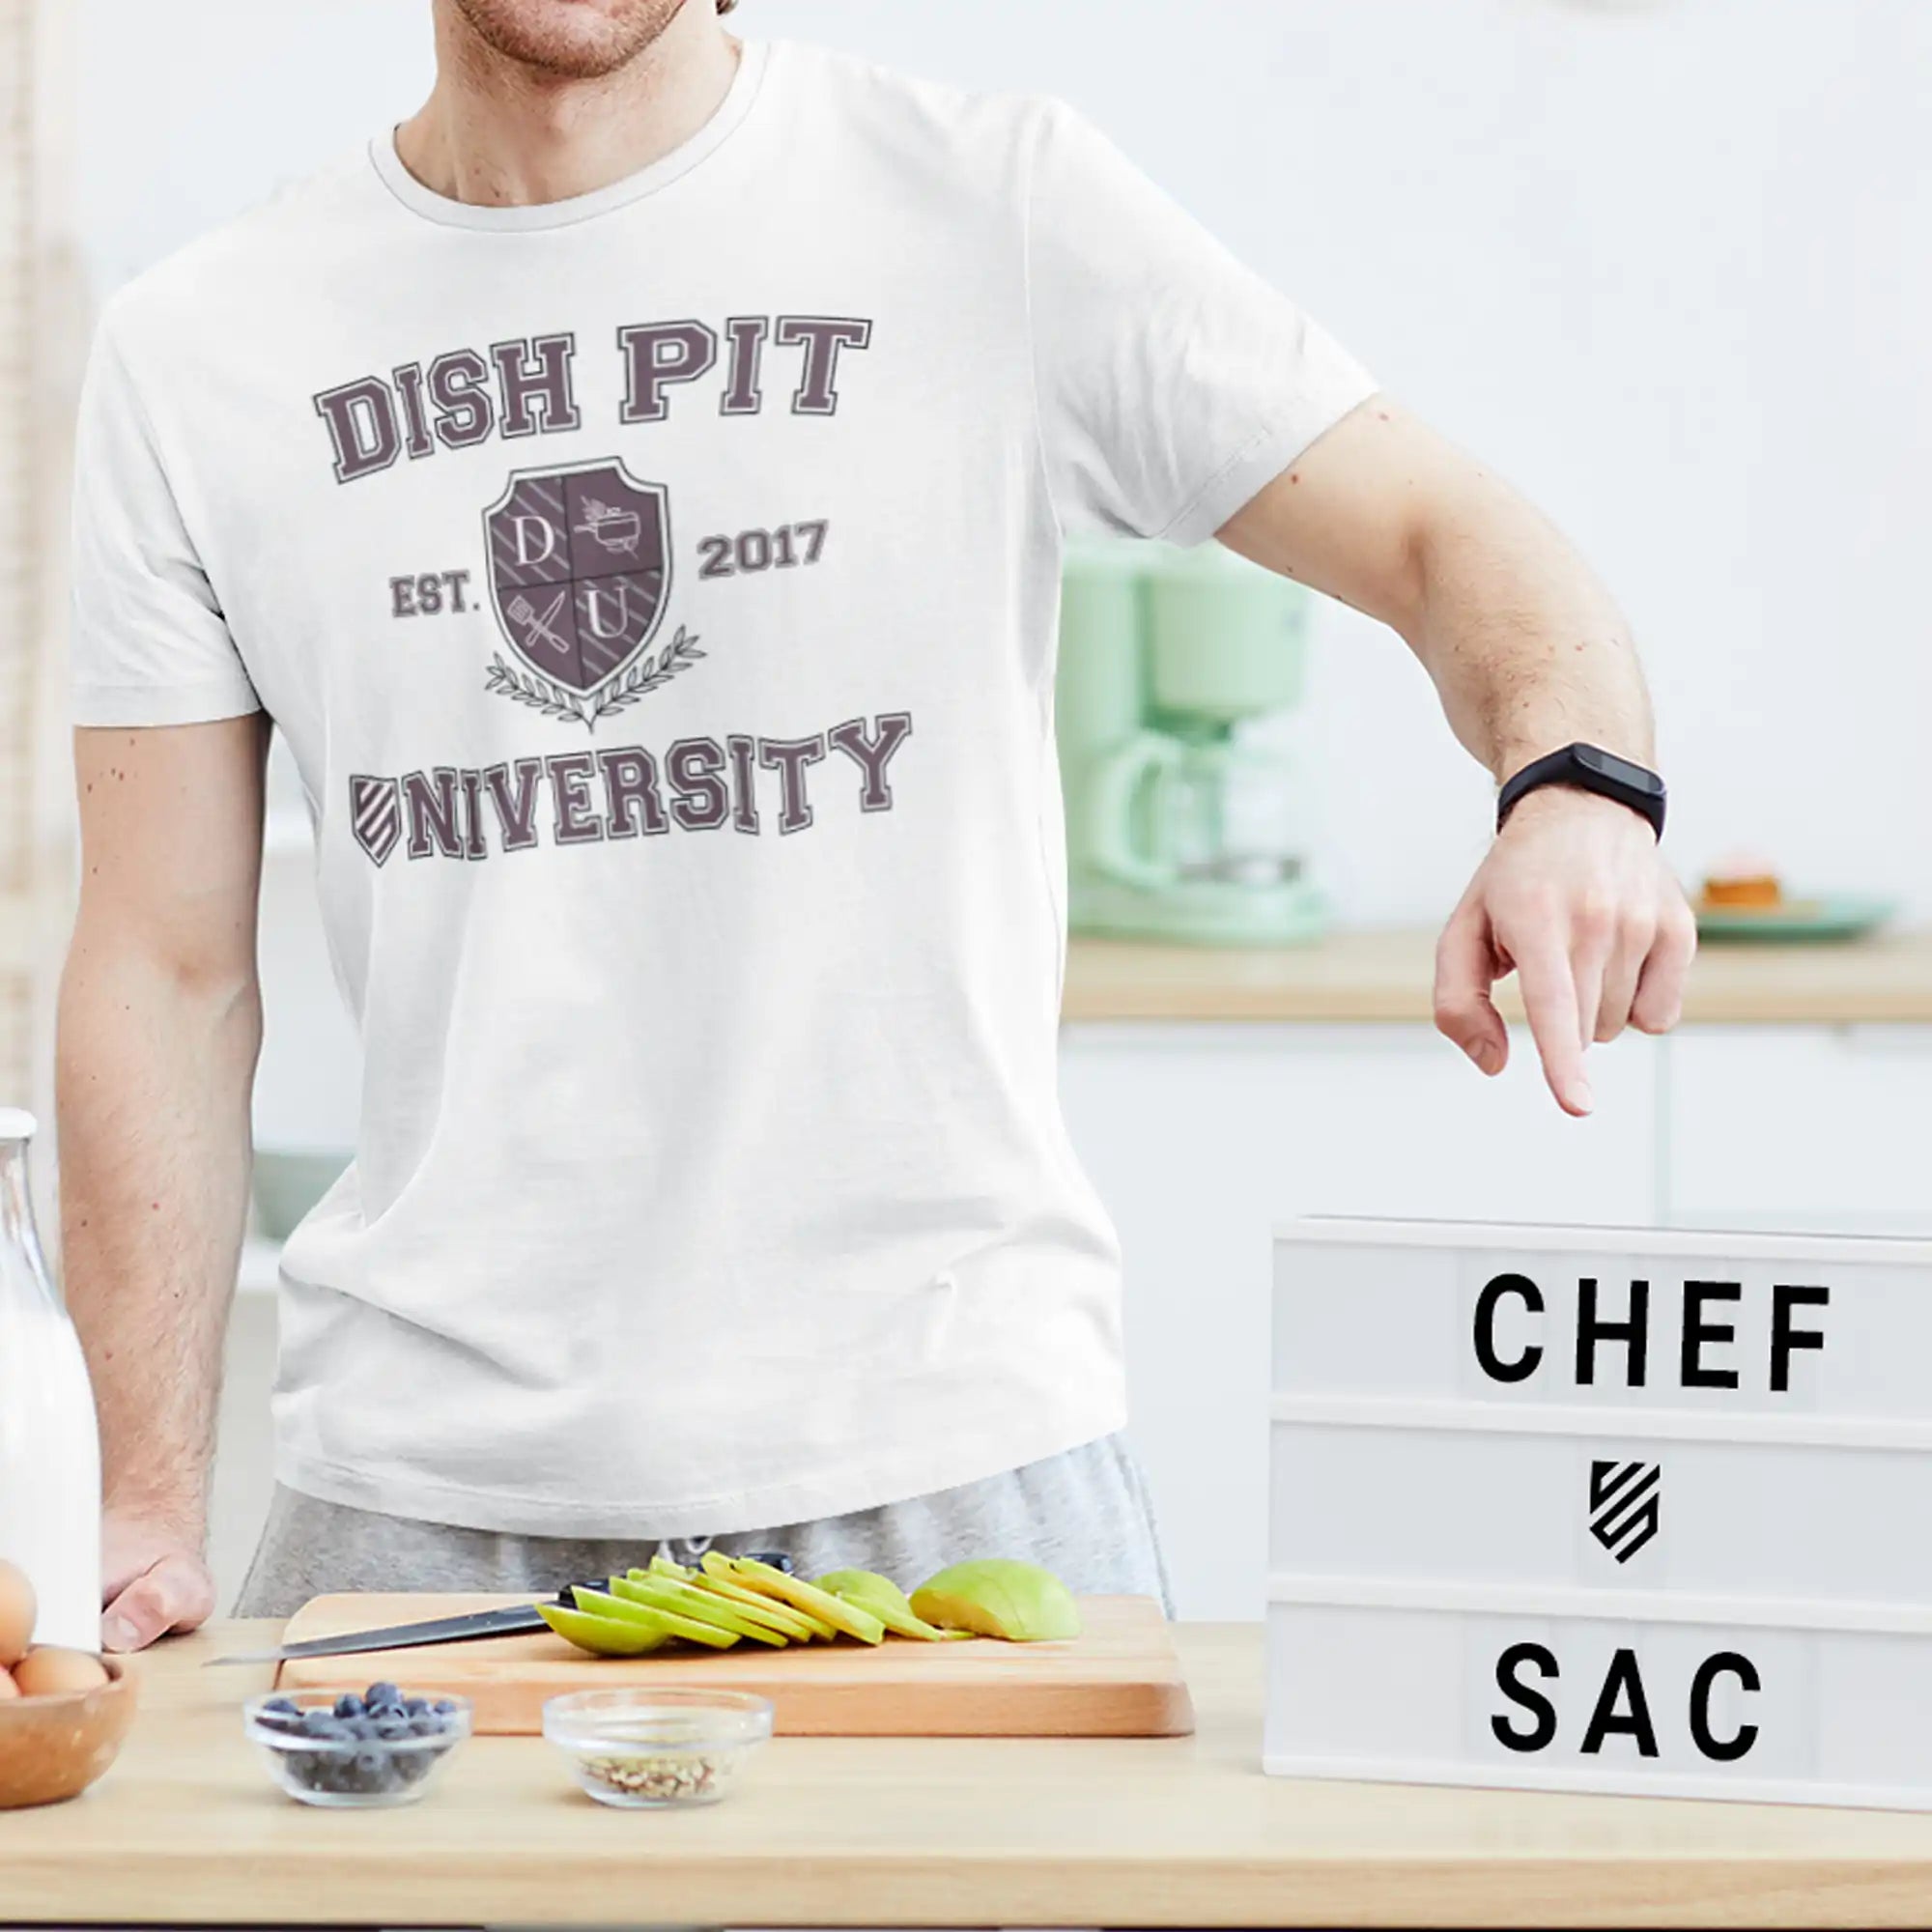 t-shirt-mockup-featuring-a-man-cooking-at-home-39561-r-el2.webp